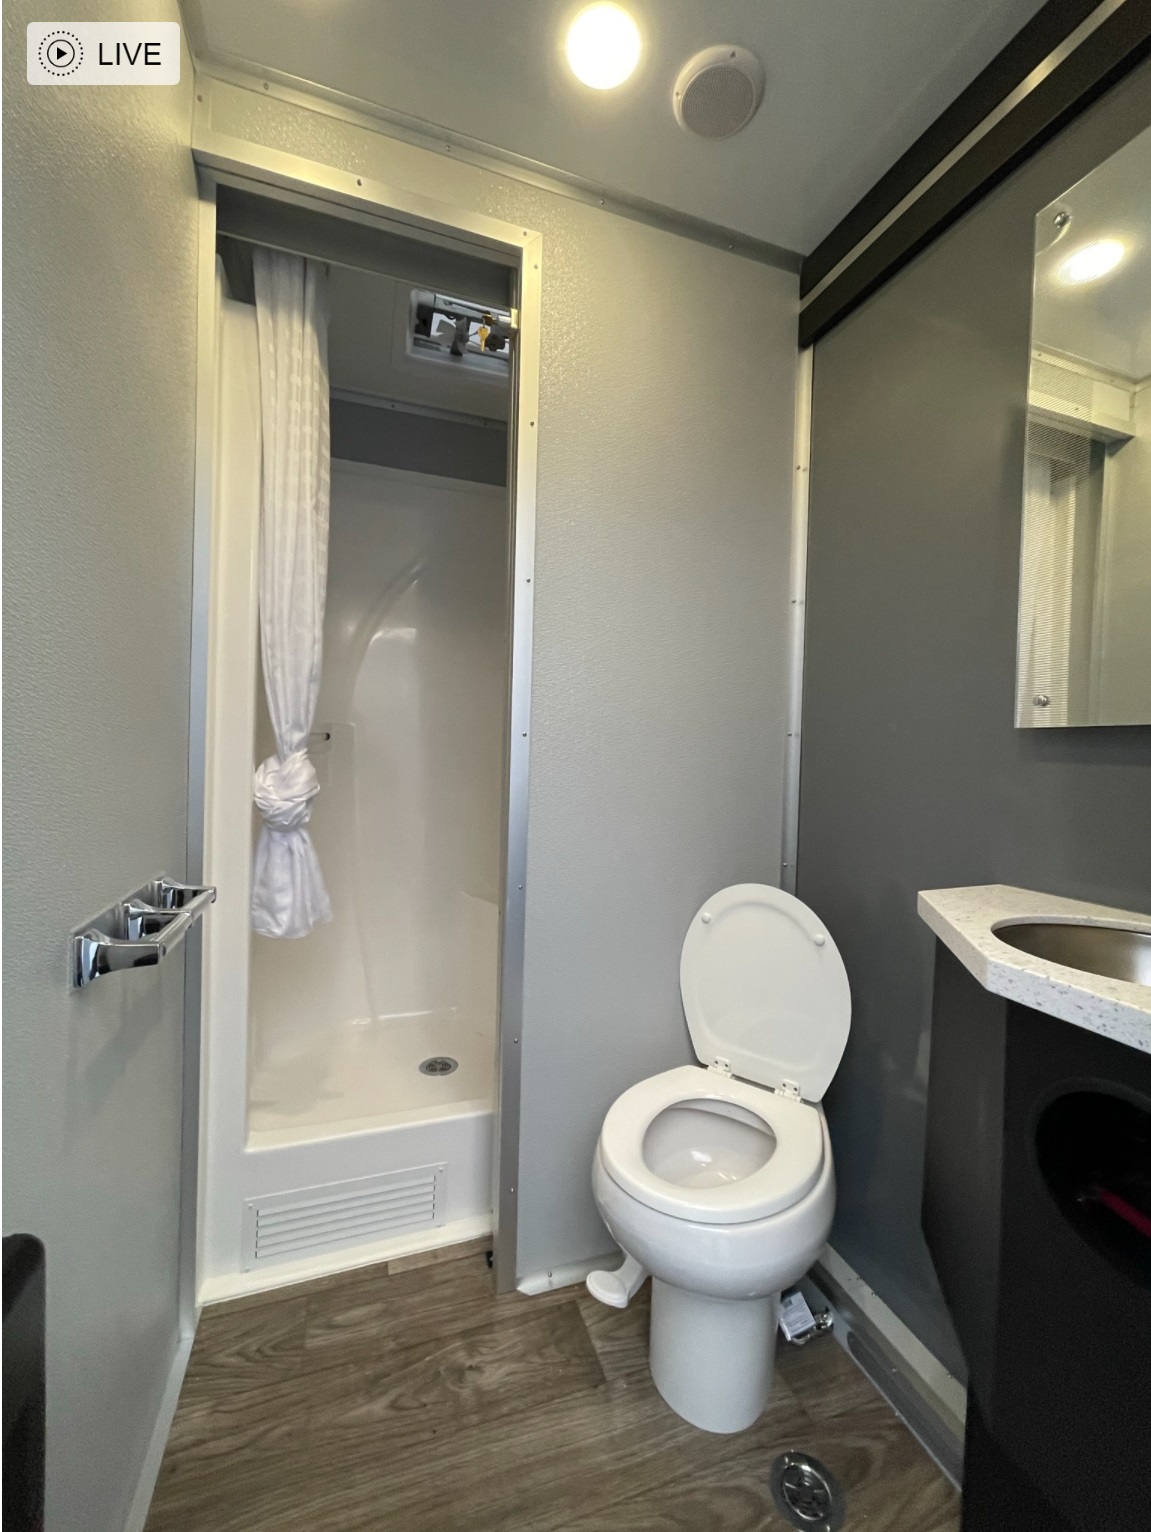 VIP Trailers 3 station shower restroom combo trailer interior